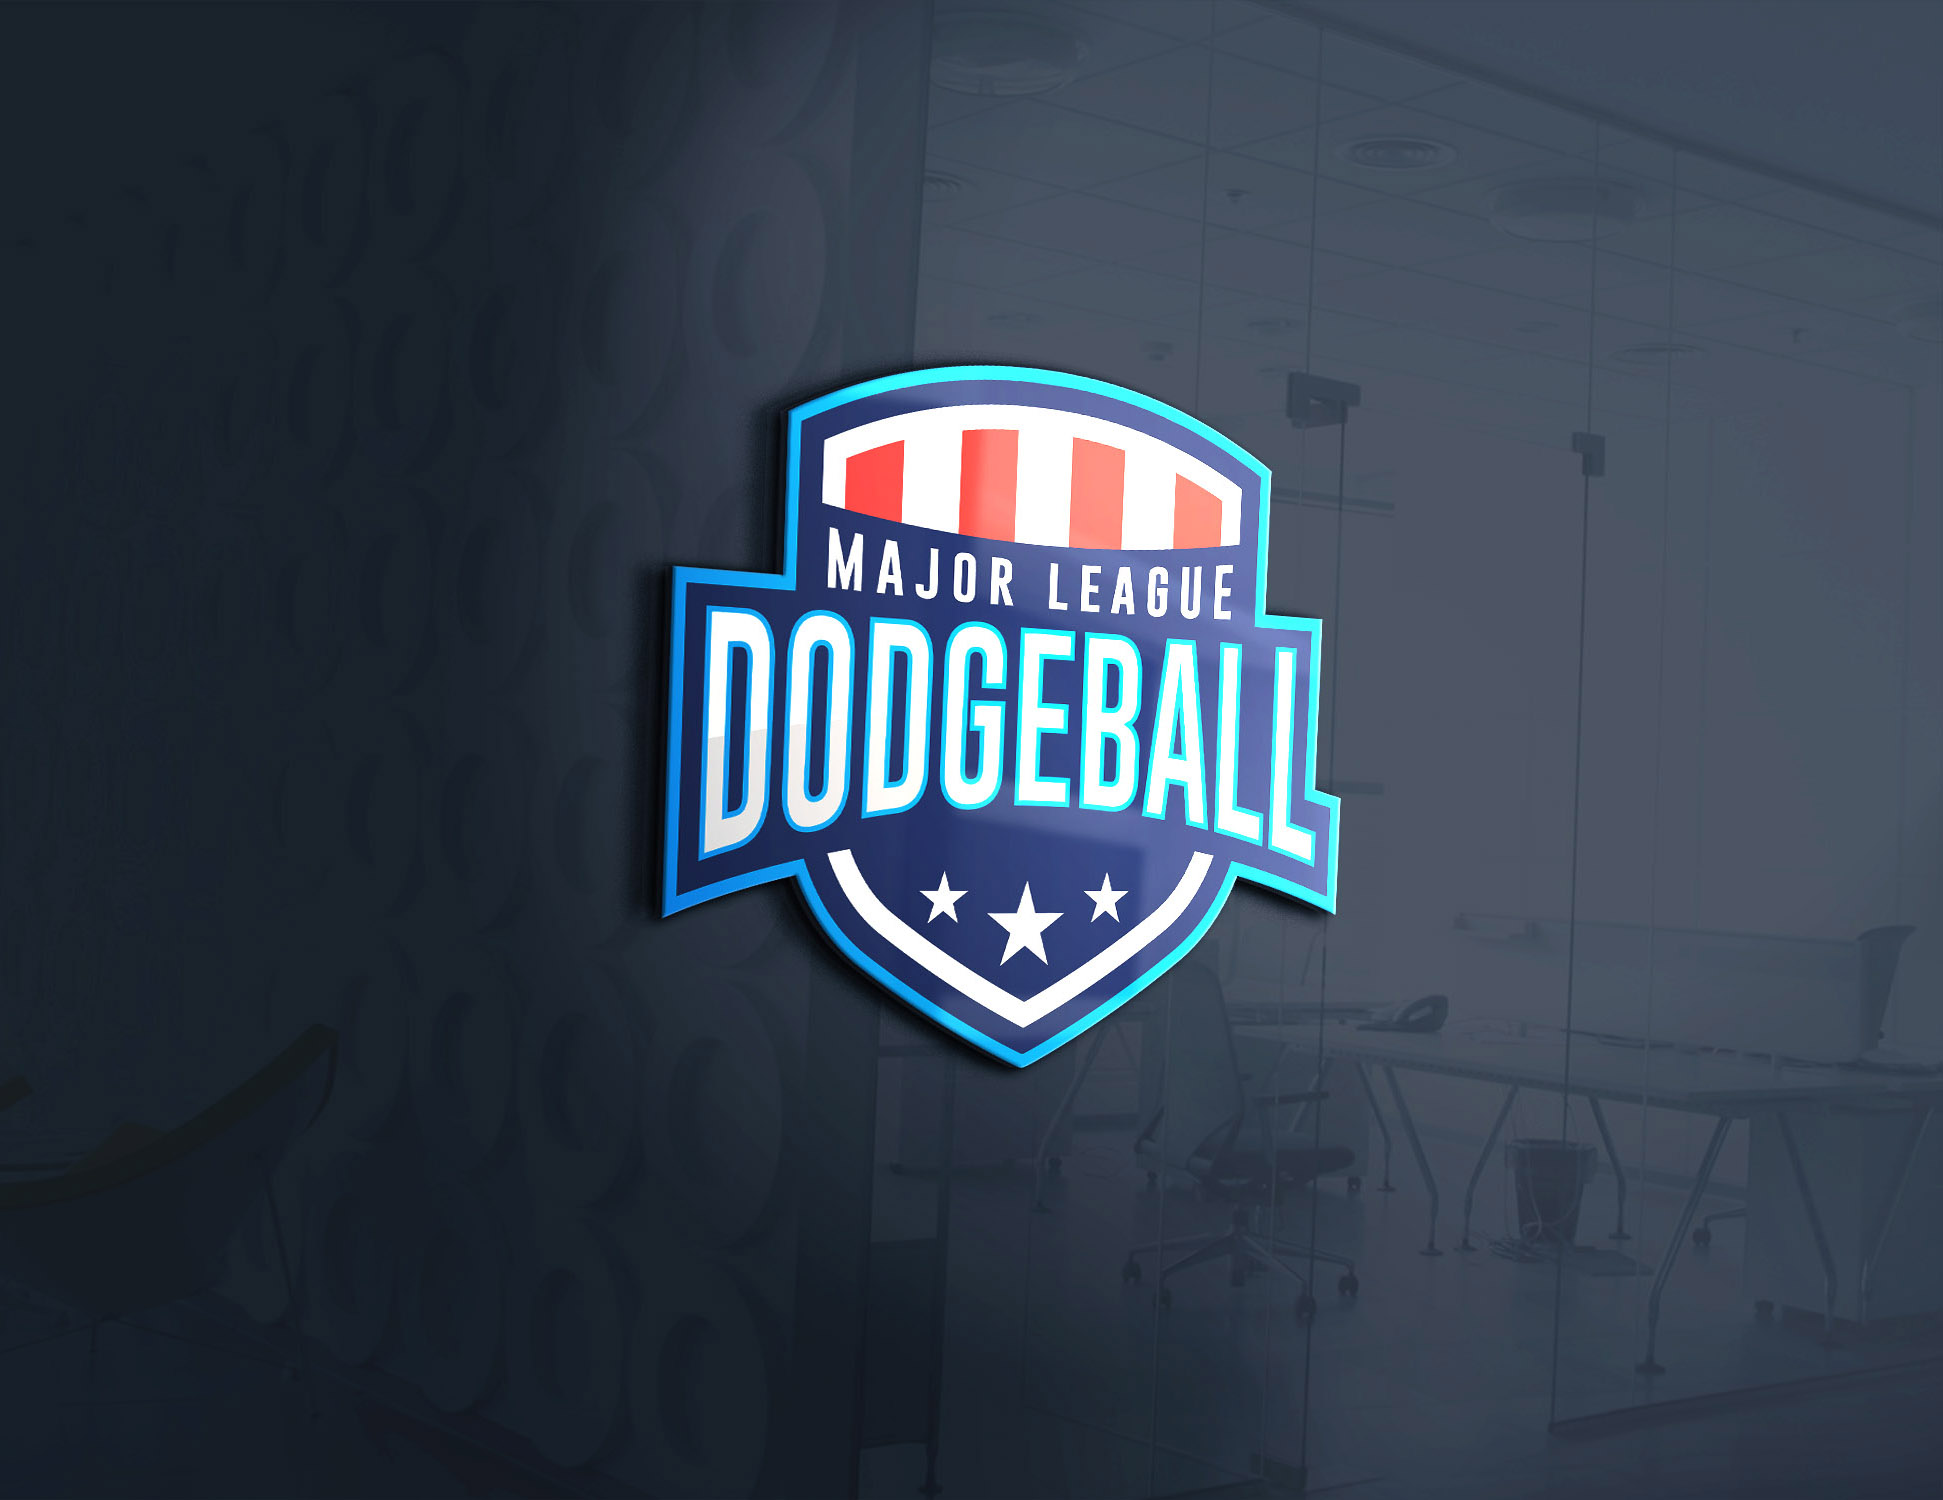 About Major League Dodgeball